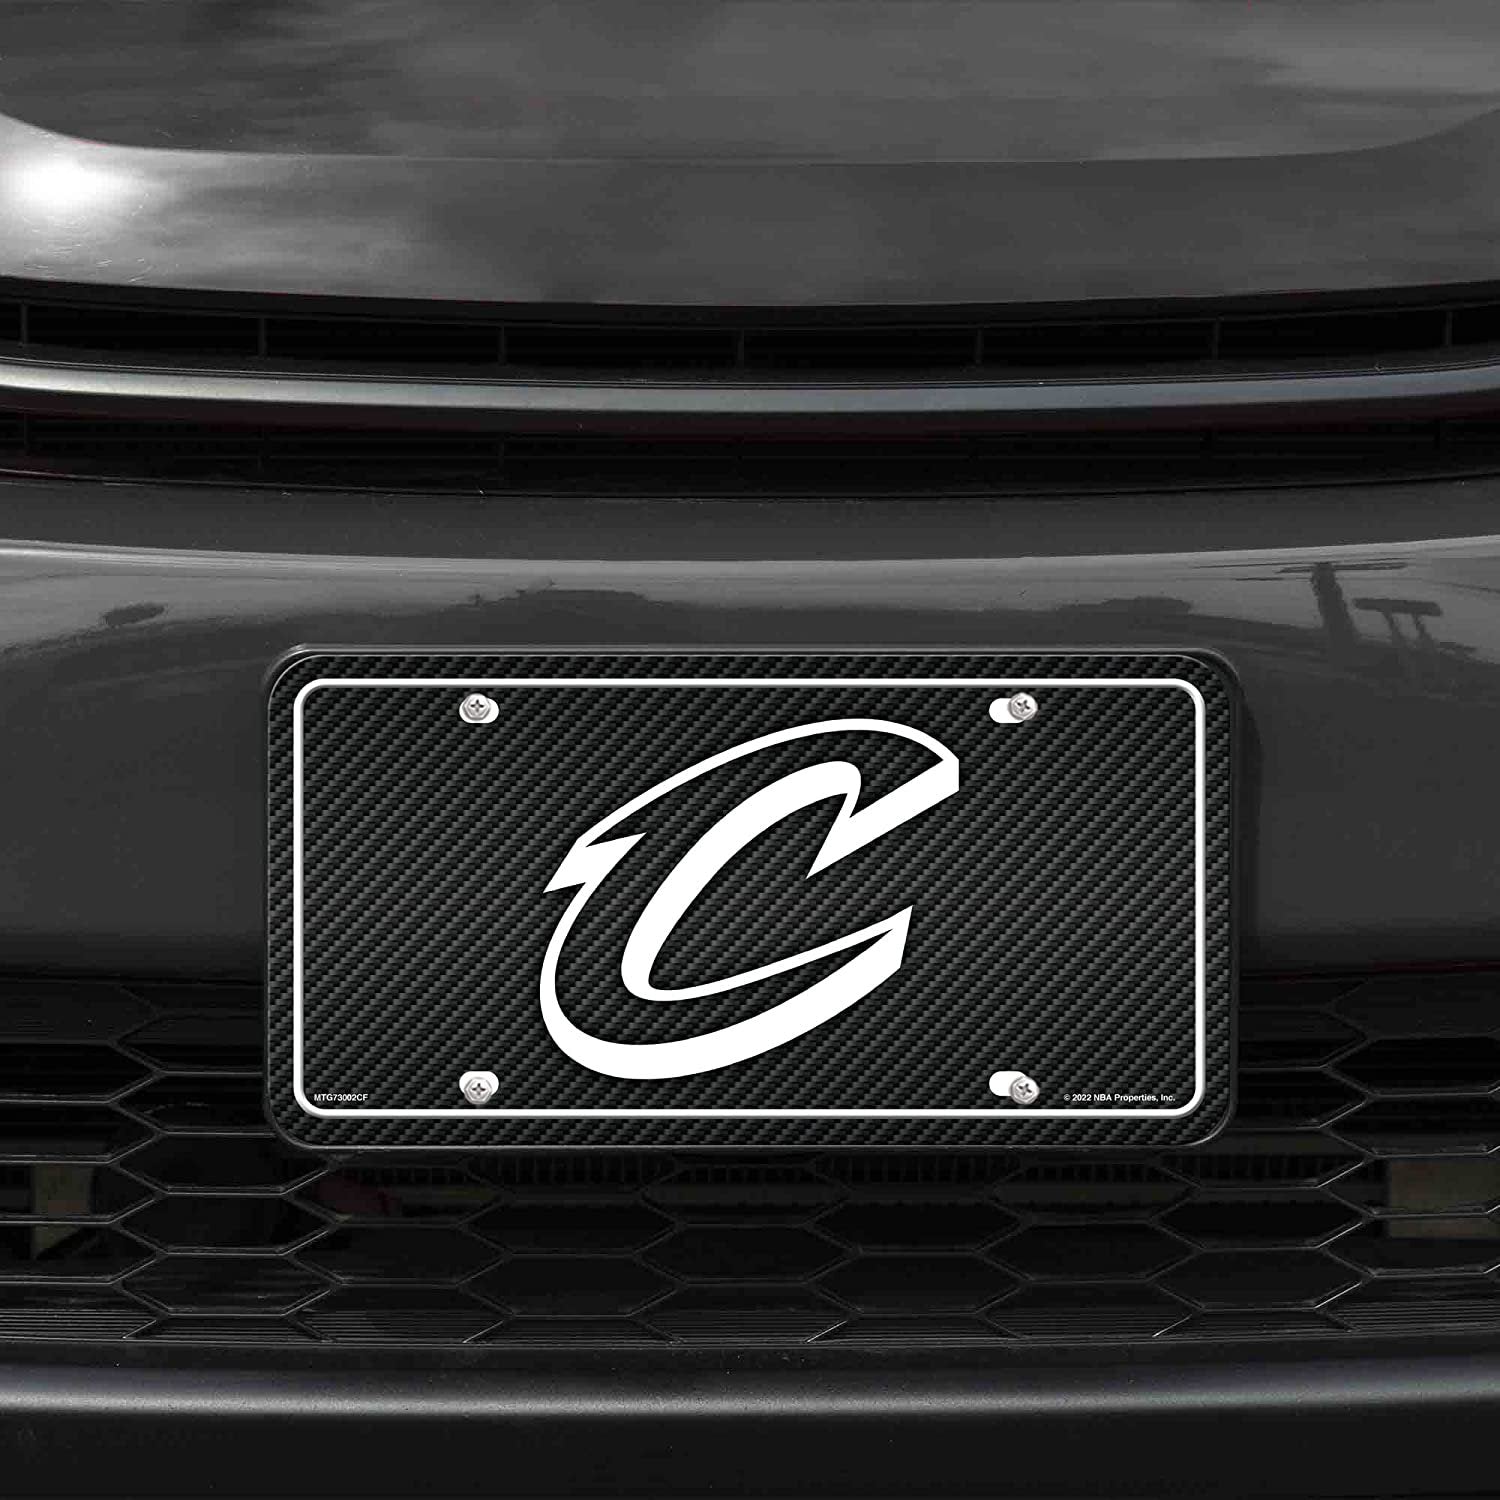 Cleveland Cavaliers Metal Tag License Plate Aluminum Novelty Carbon Fiber Design 12x6 Inch